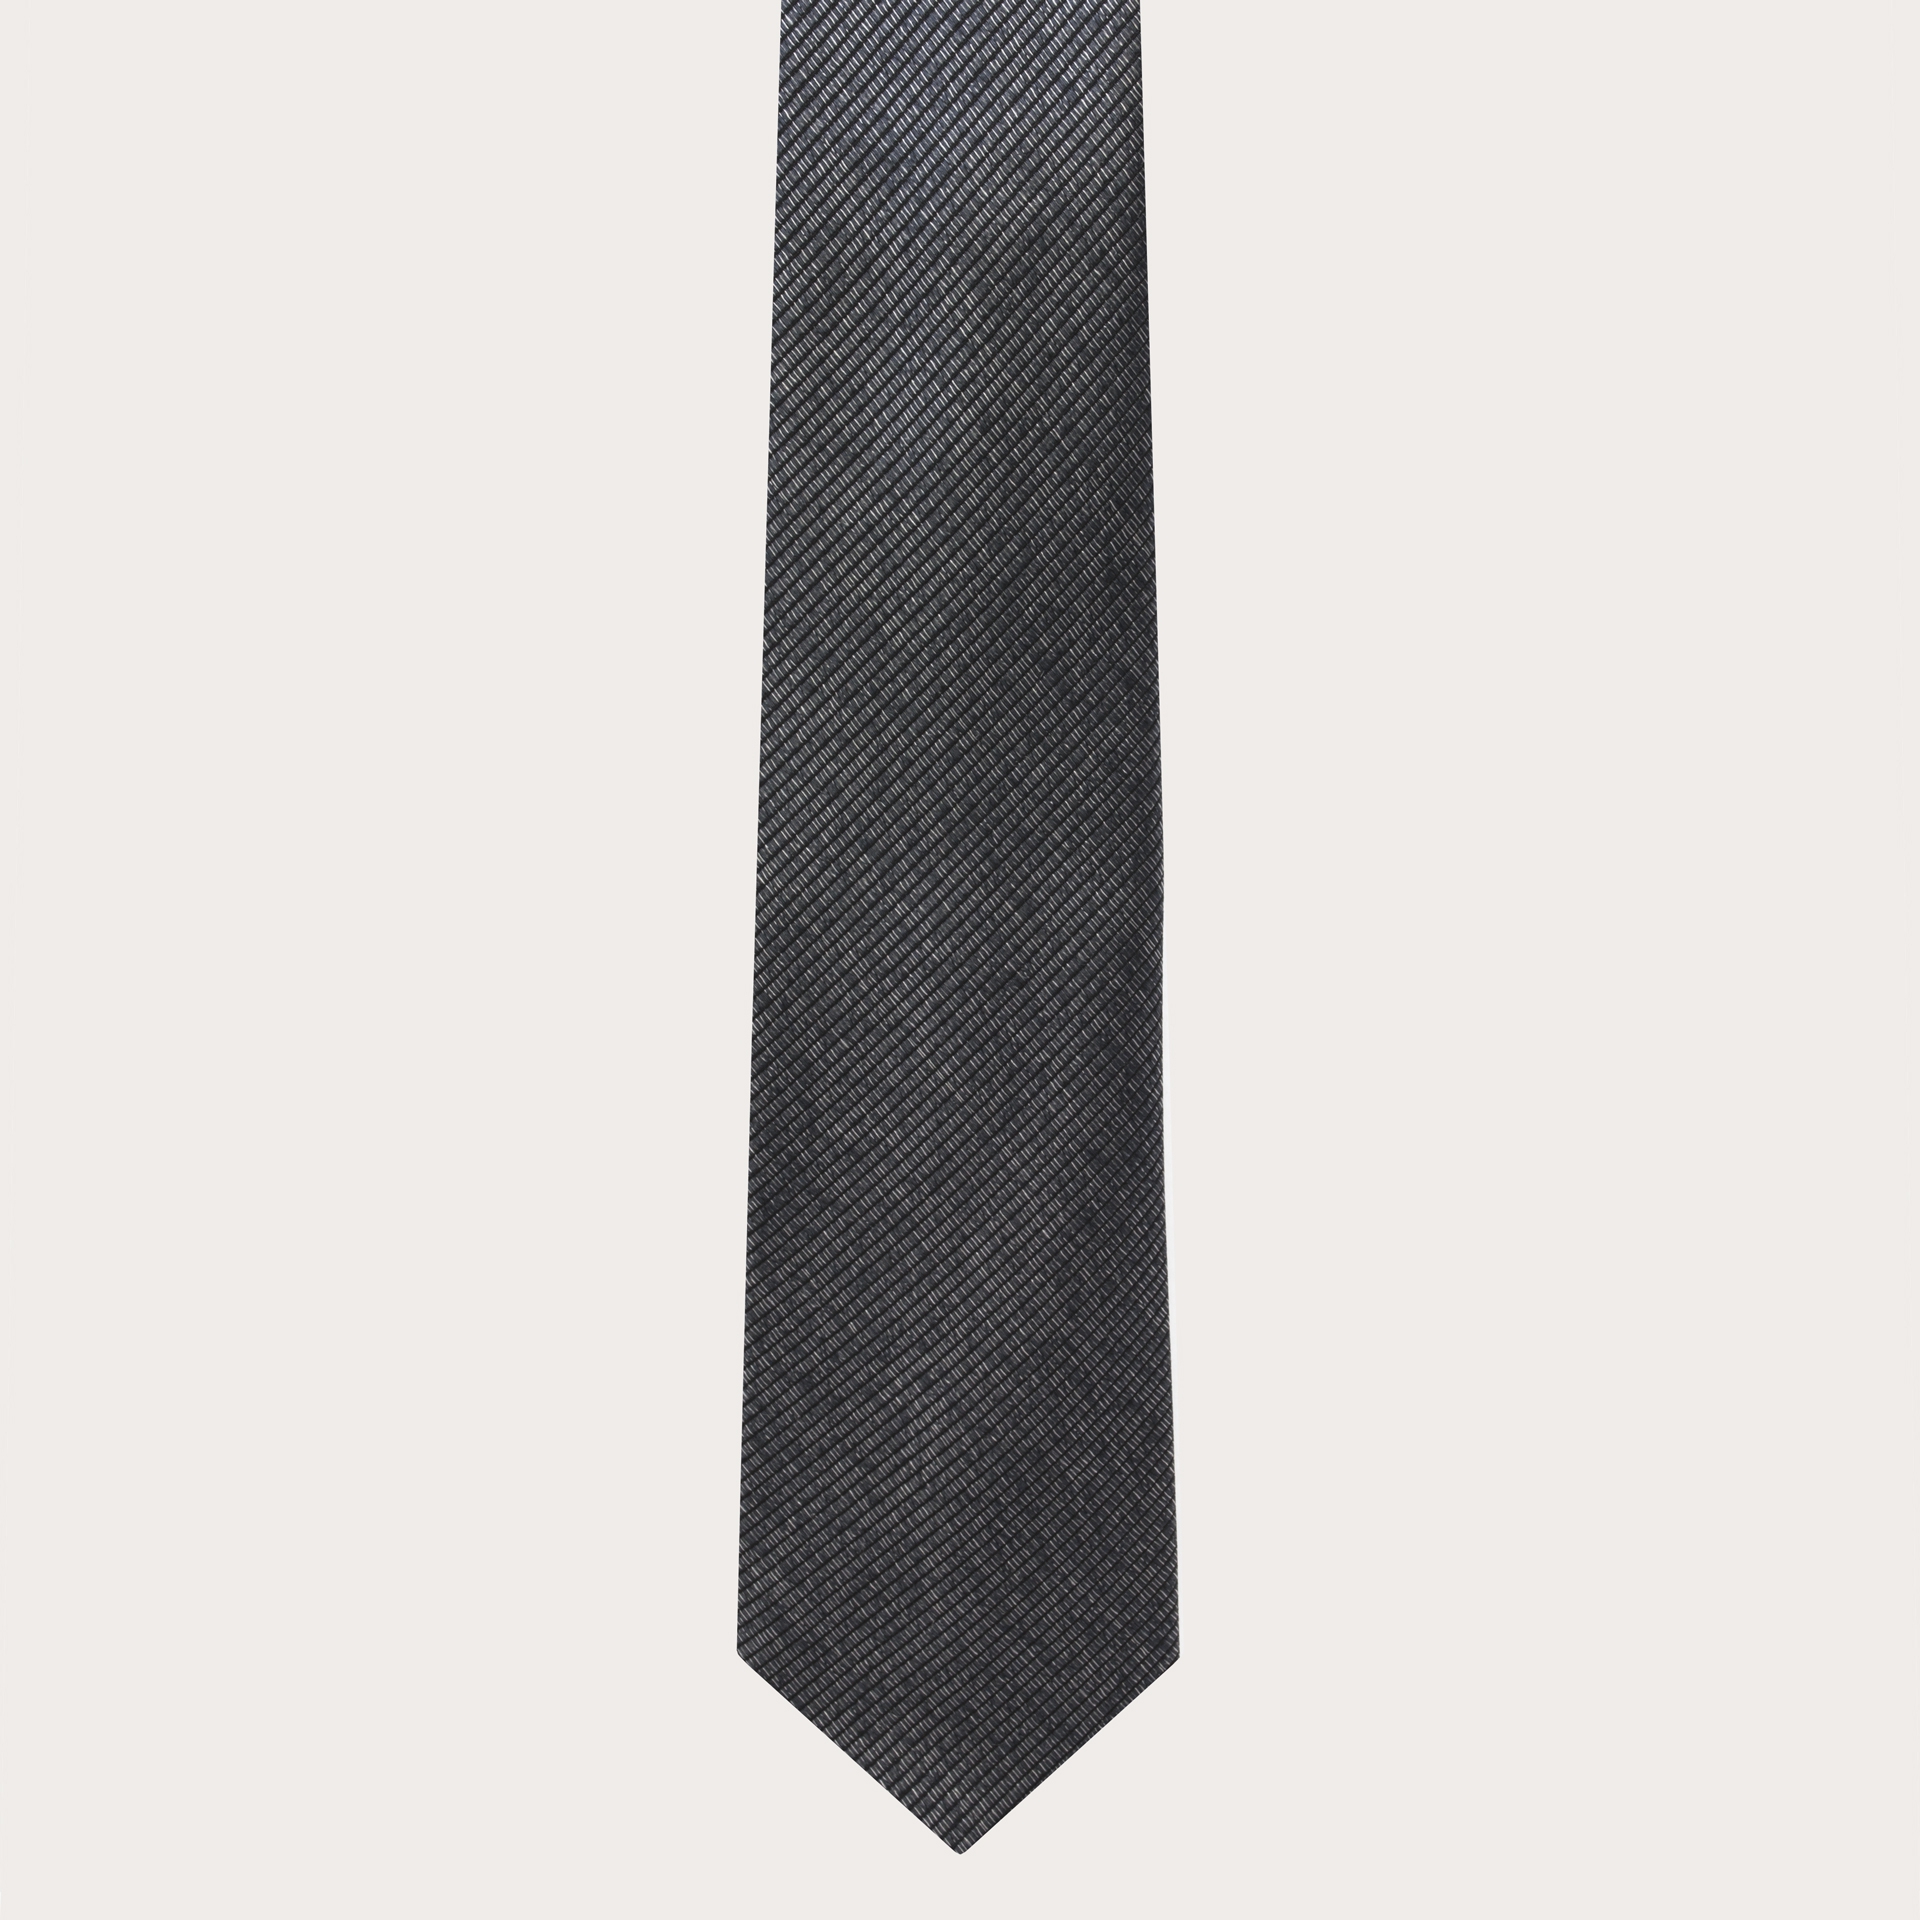 BRUCLE Men's necktie in black and silver melange jacquard silk